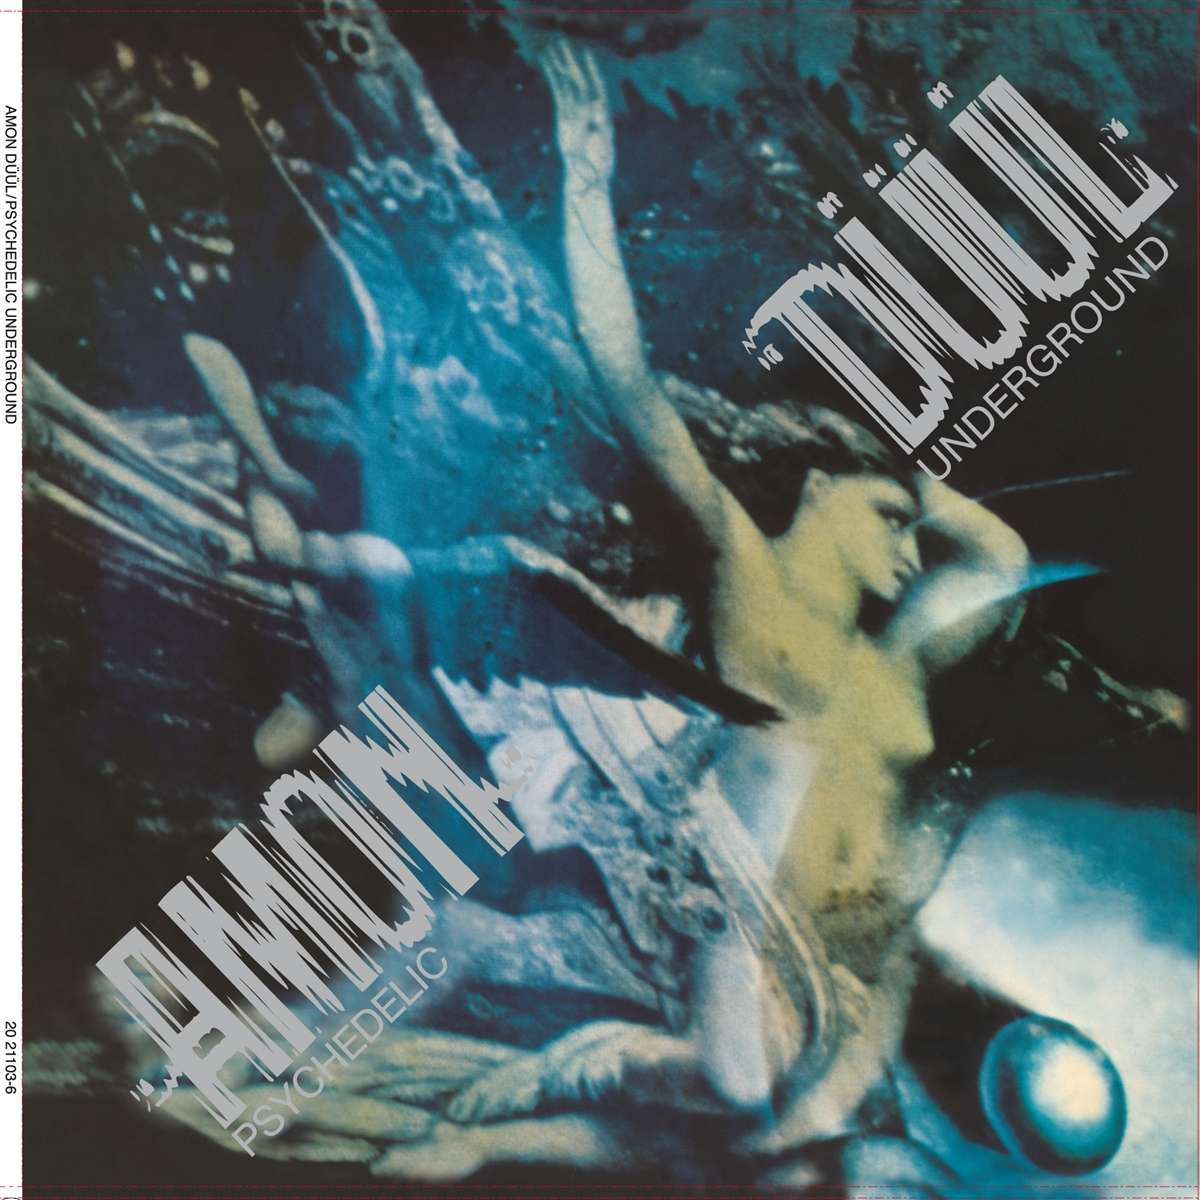 Okładka płyty winylowej artysty Amon Dull o tytule Psychedelic Underground